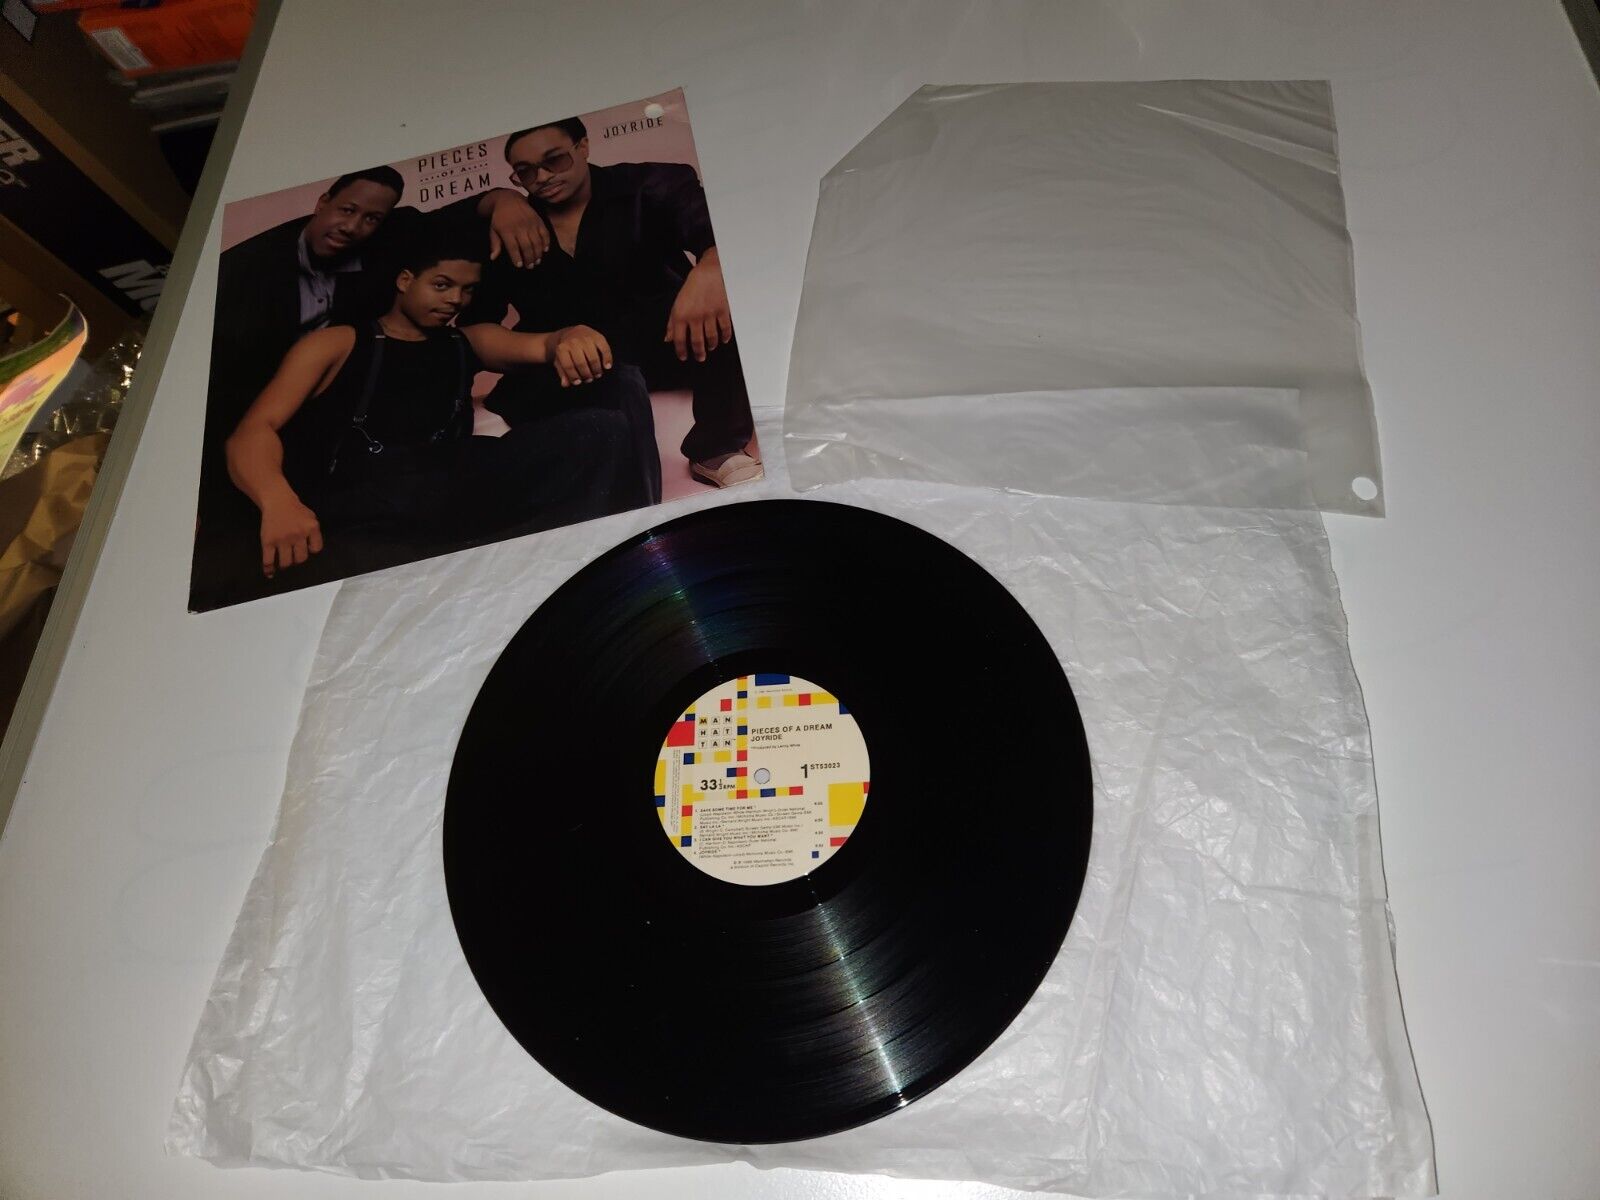 PIECES OF A DREAM - JOYRIDE - 1986 VINYL LP RECORD ALBUM